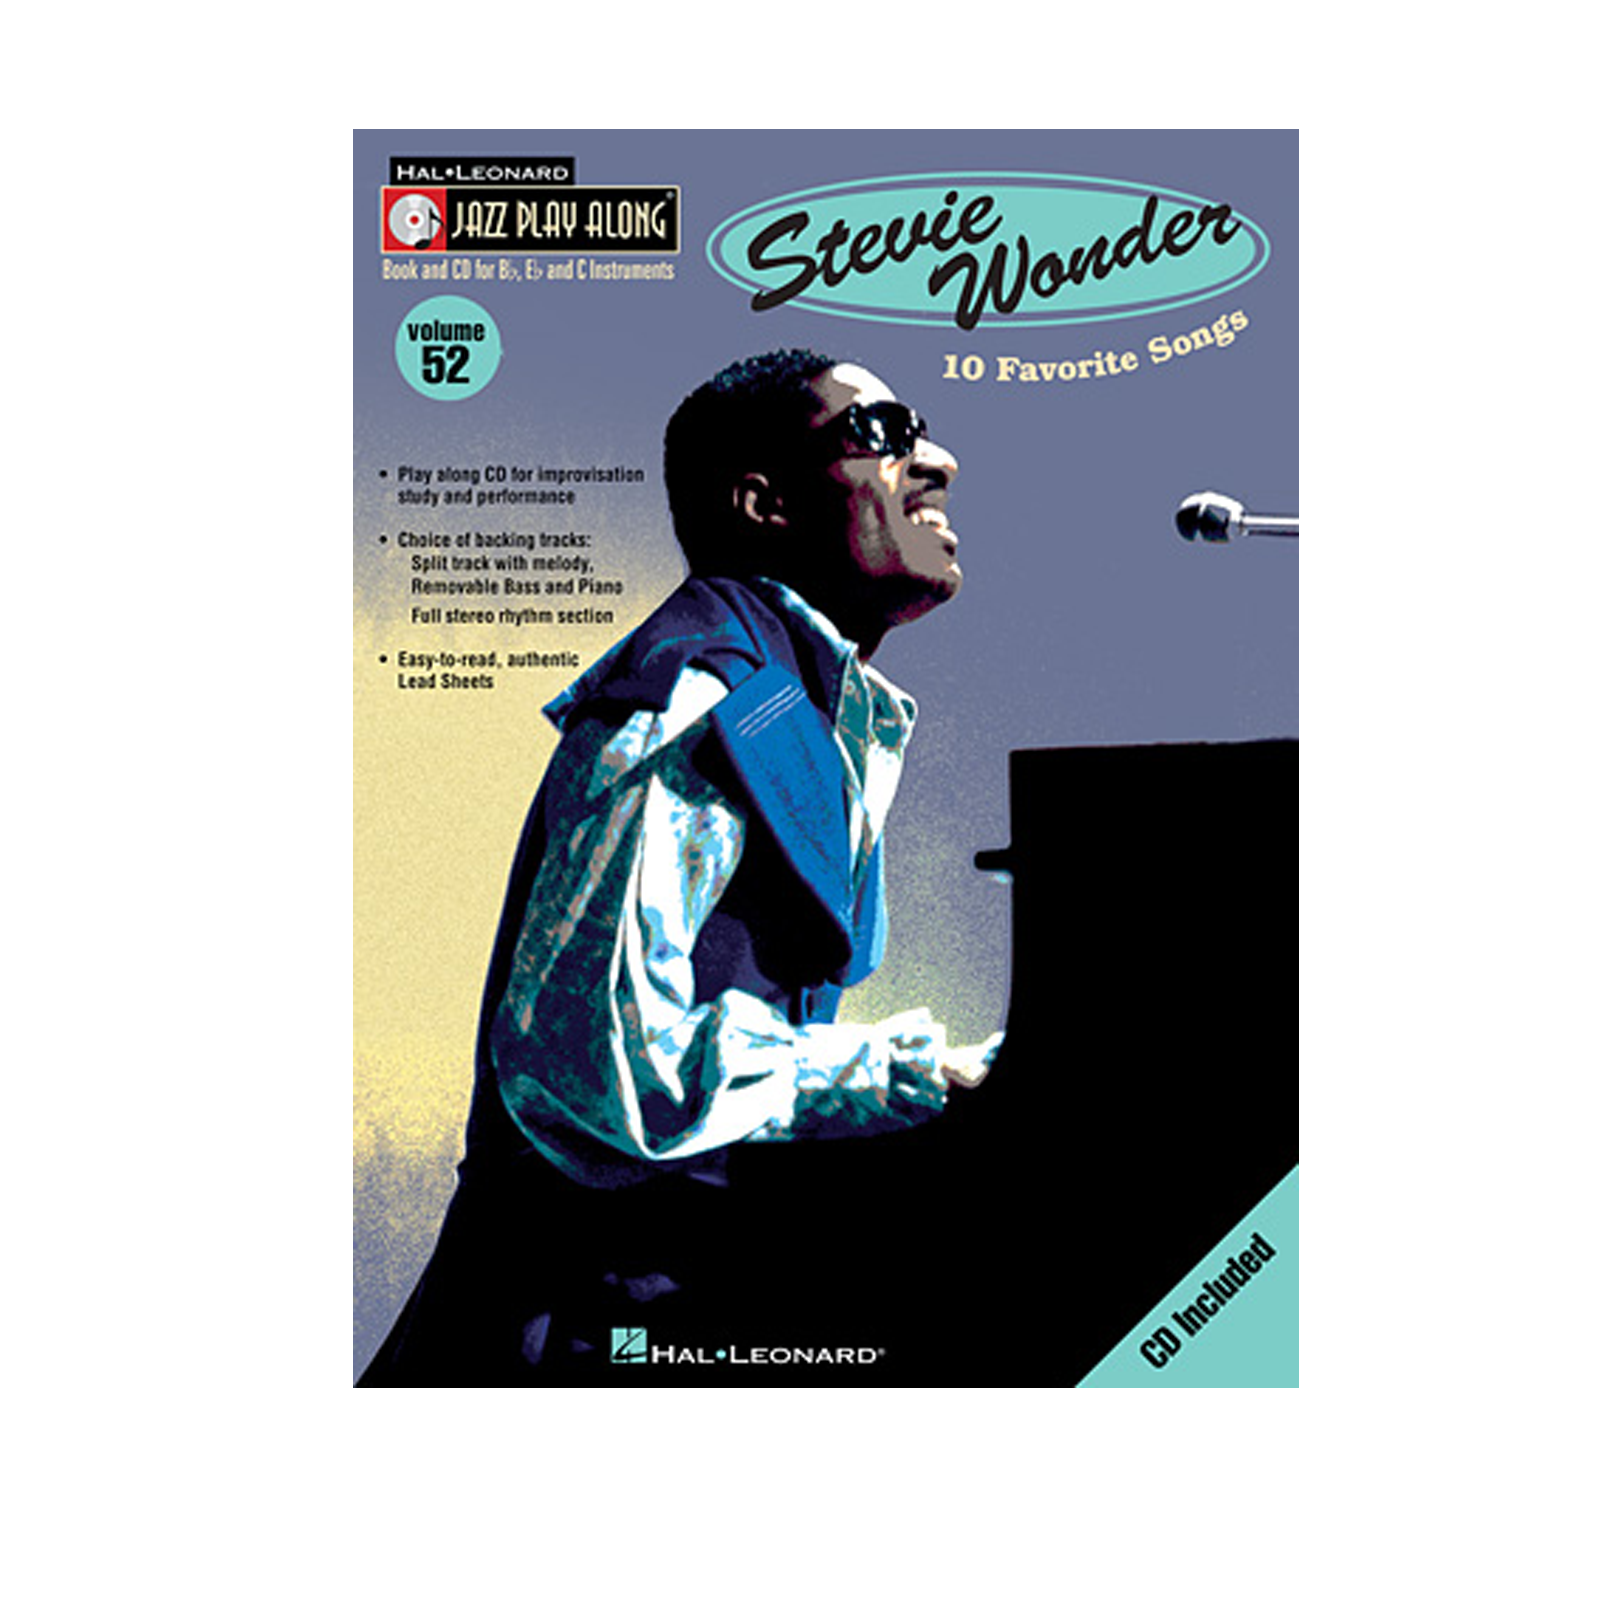 Stevie Wonder Jazz Play Along Book Volume 52